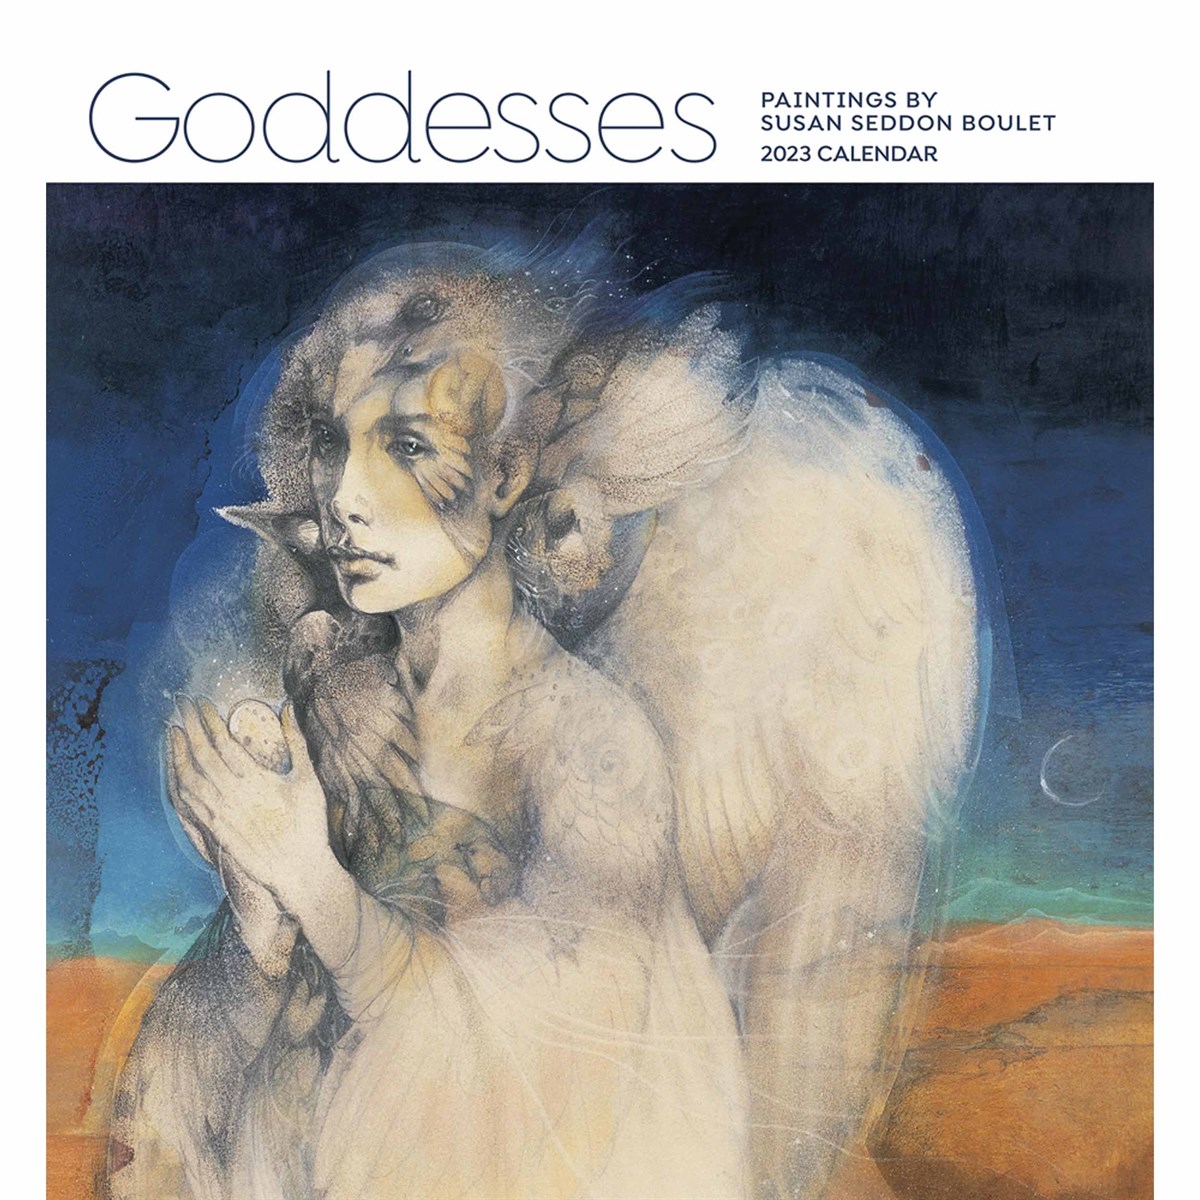 Susan Seddon Boulet, Goddesses 2023 Calendars